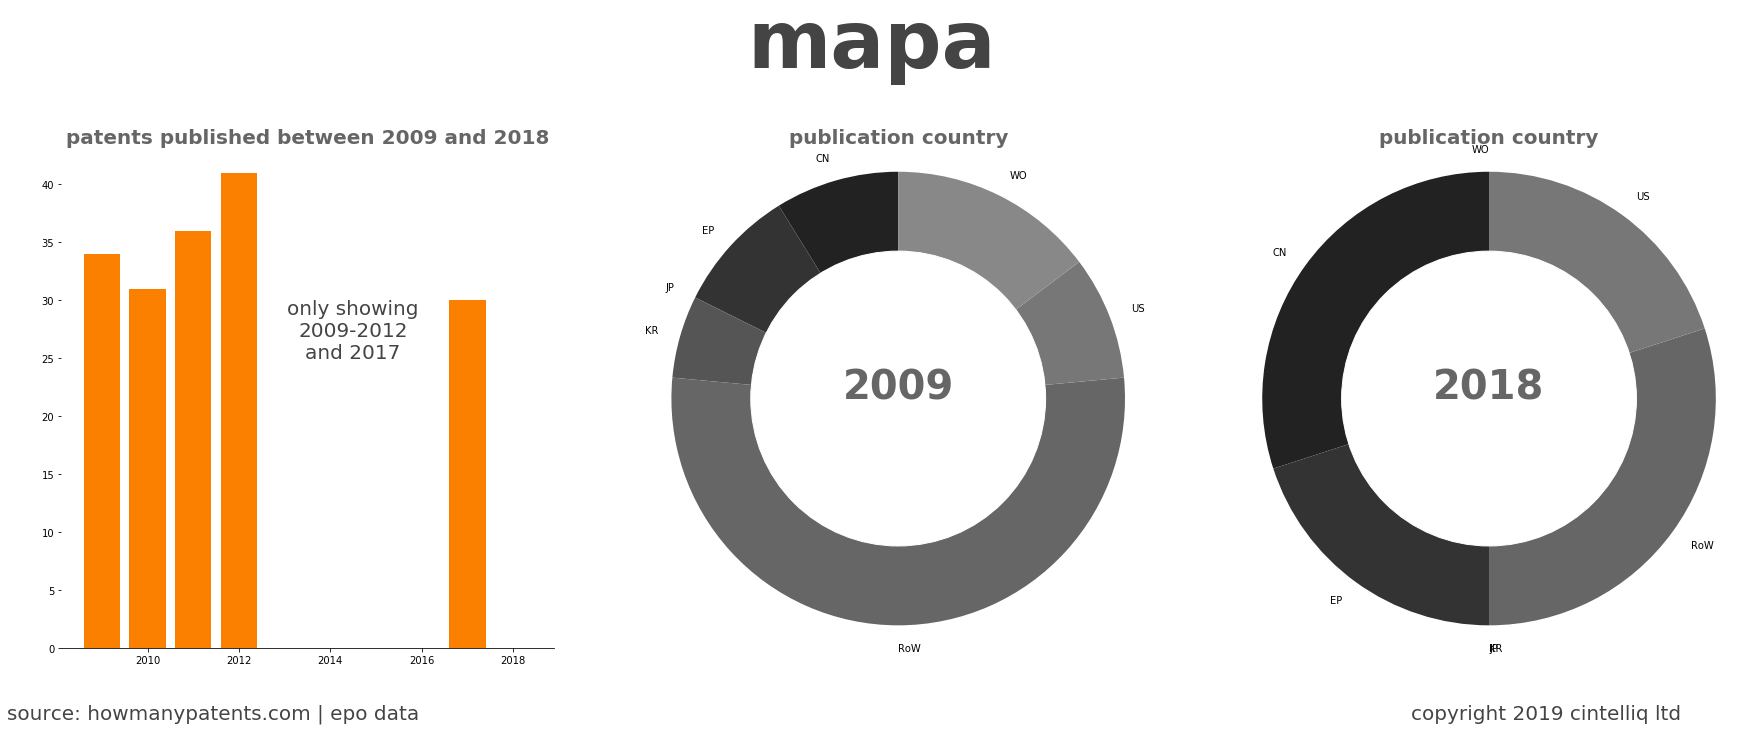 summary of patents for Mapa